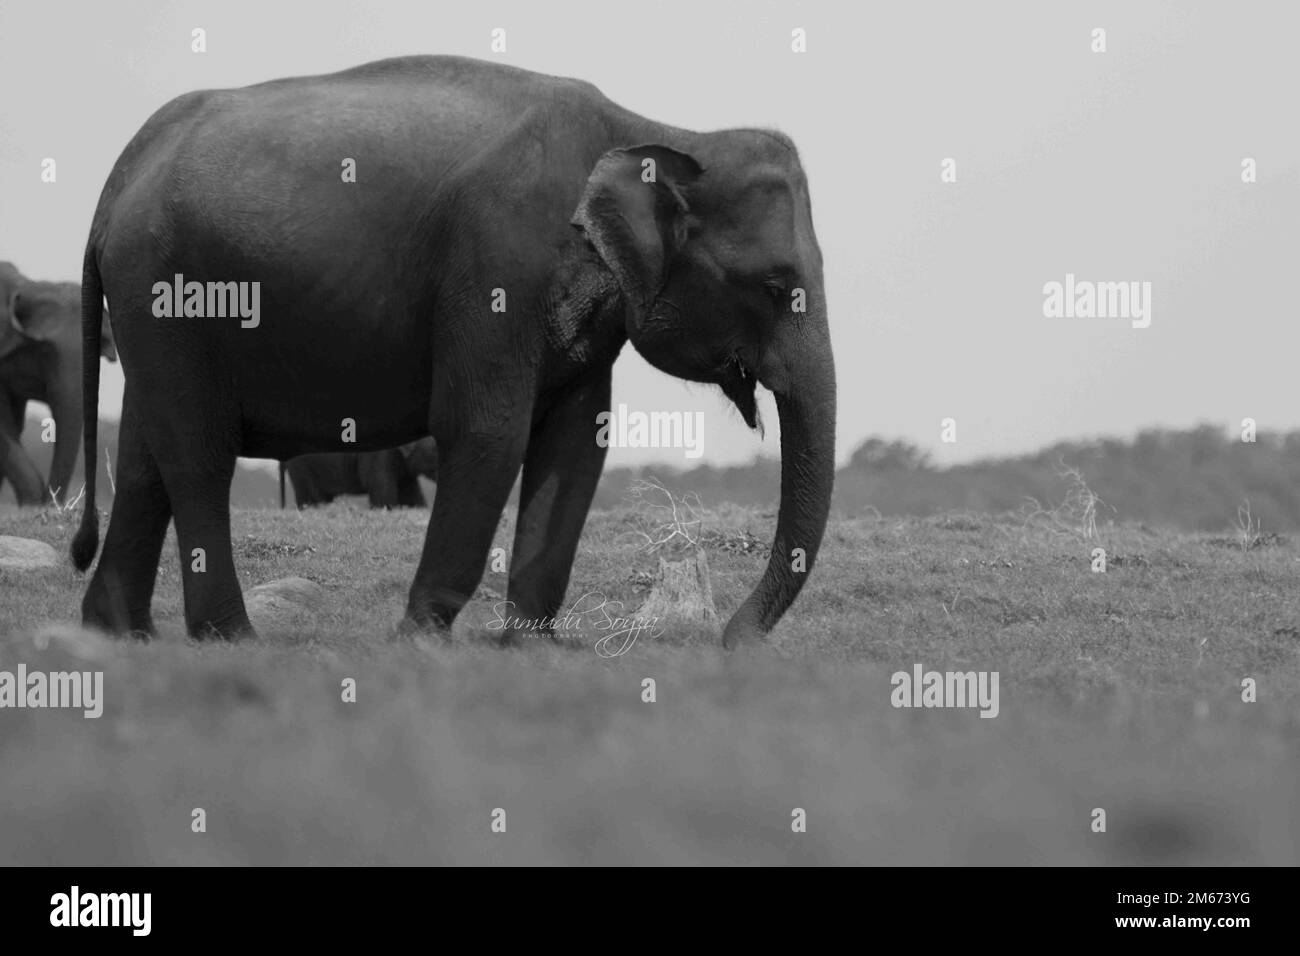 Elephants of Sri Lanka in the Wild Stock Photo